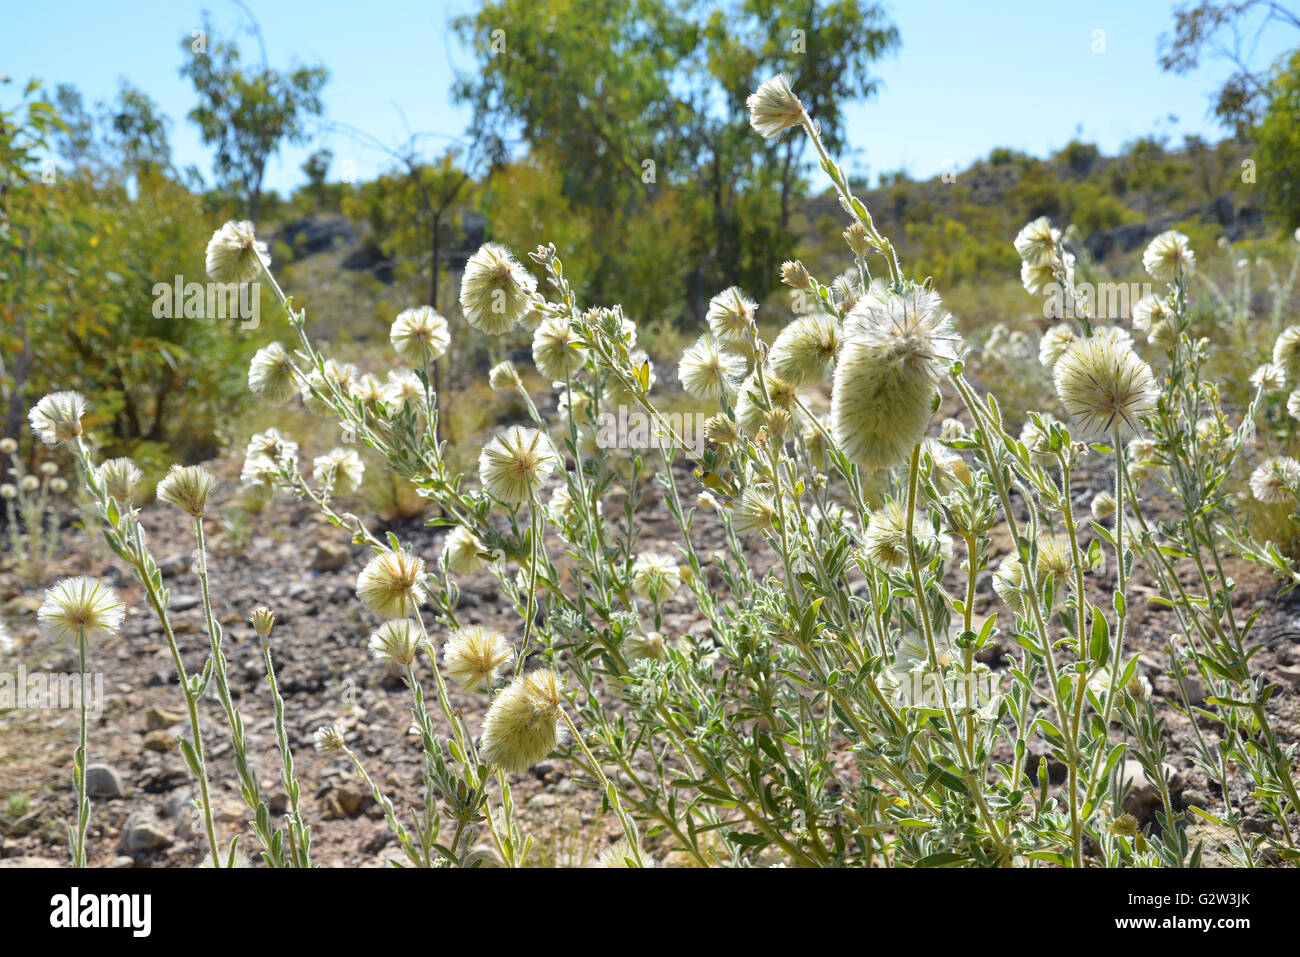 Flauschige Blüten des nativen Featherhead Grases (Ptilotus Macrocephalus) im Outback Australien Stockfoto